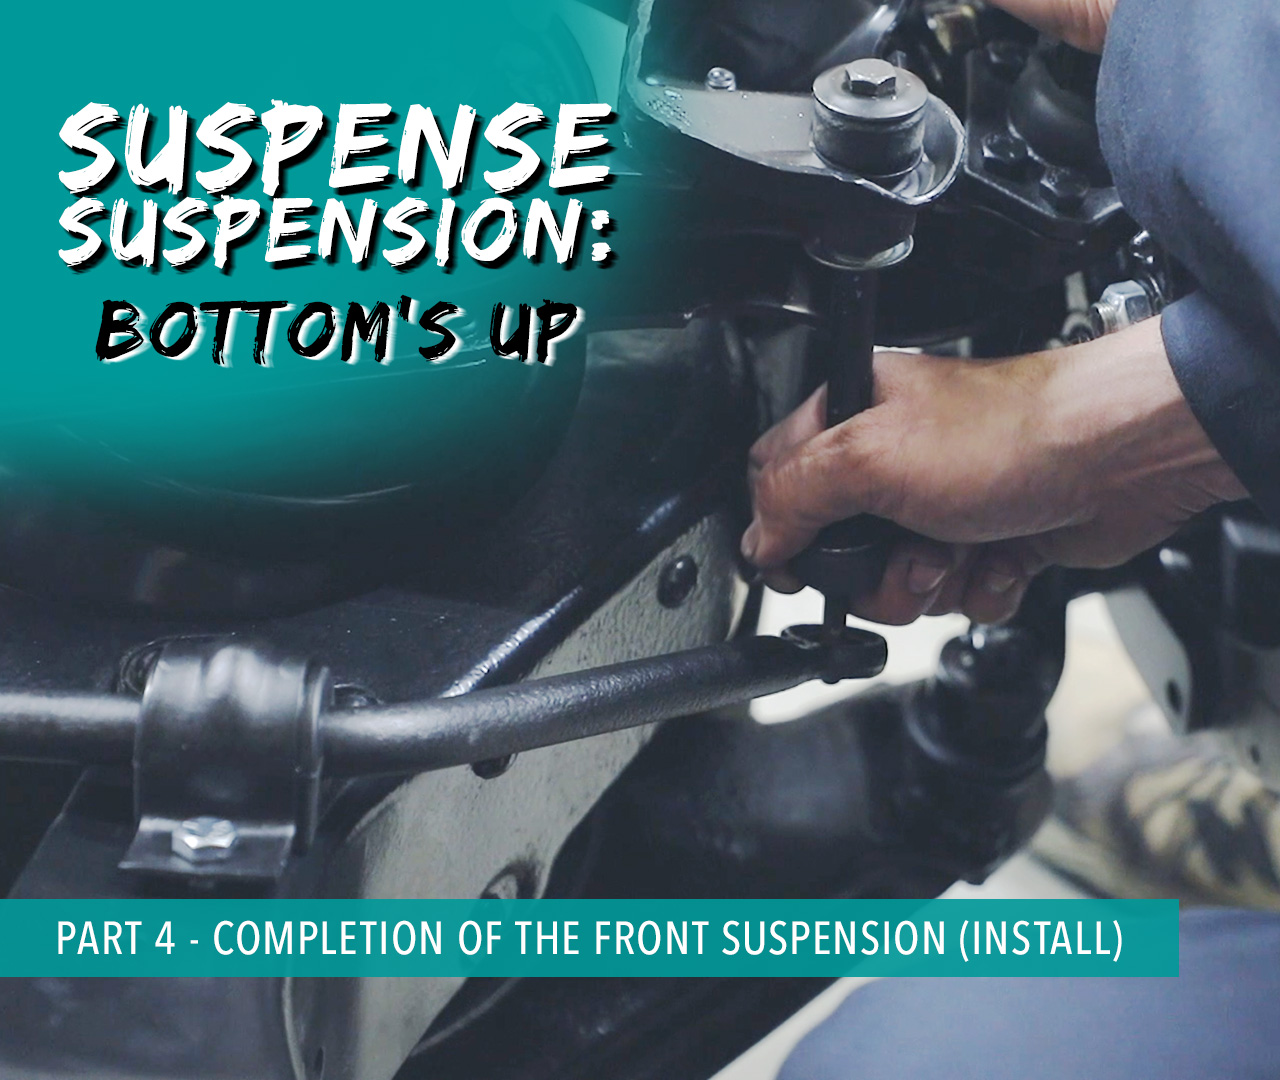 Suspense Suspension Part 4 - Completion of the Front Suspension